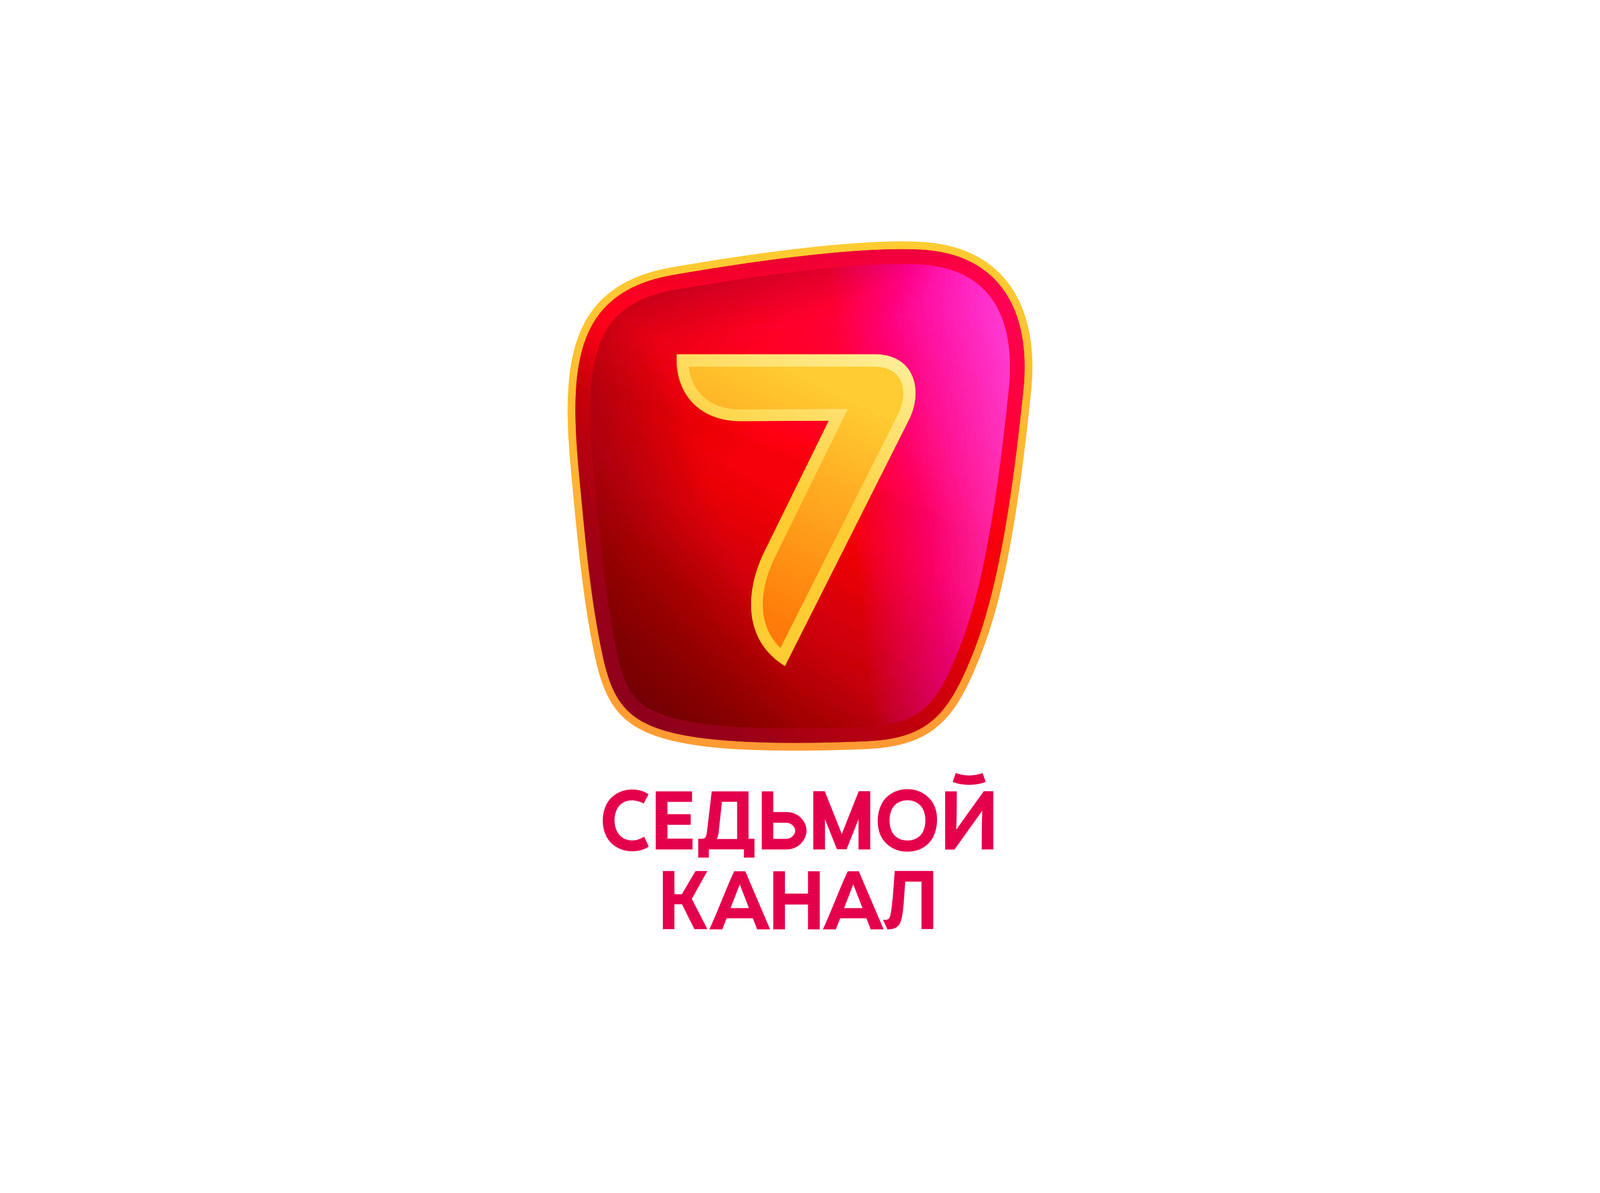 Включи 7 35. 7 Канал Казахстан. Логотипы телеканалов. Седьмой канал (Казахстан). Логотип 7 телеканала.